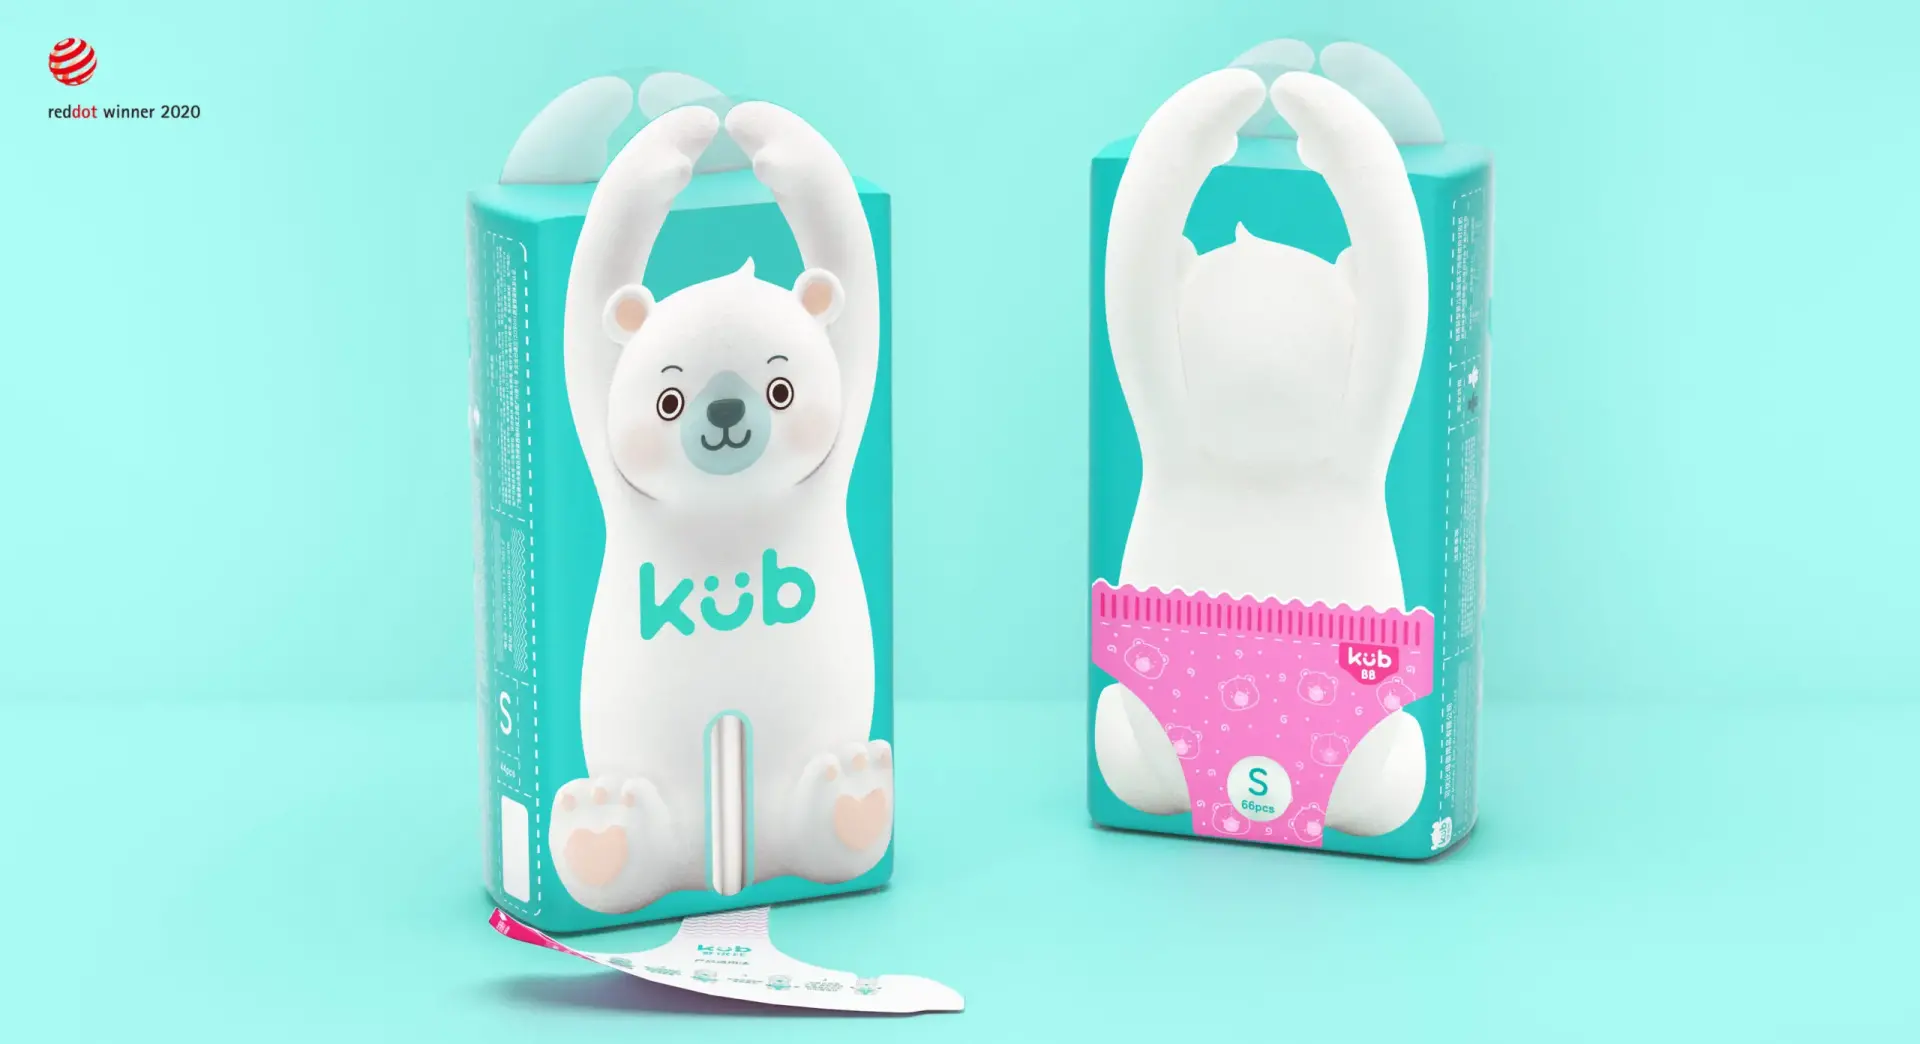 Blogduwebdesign inspiration packagings originaux innovants keyobi 2